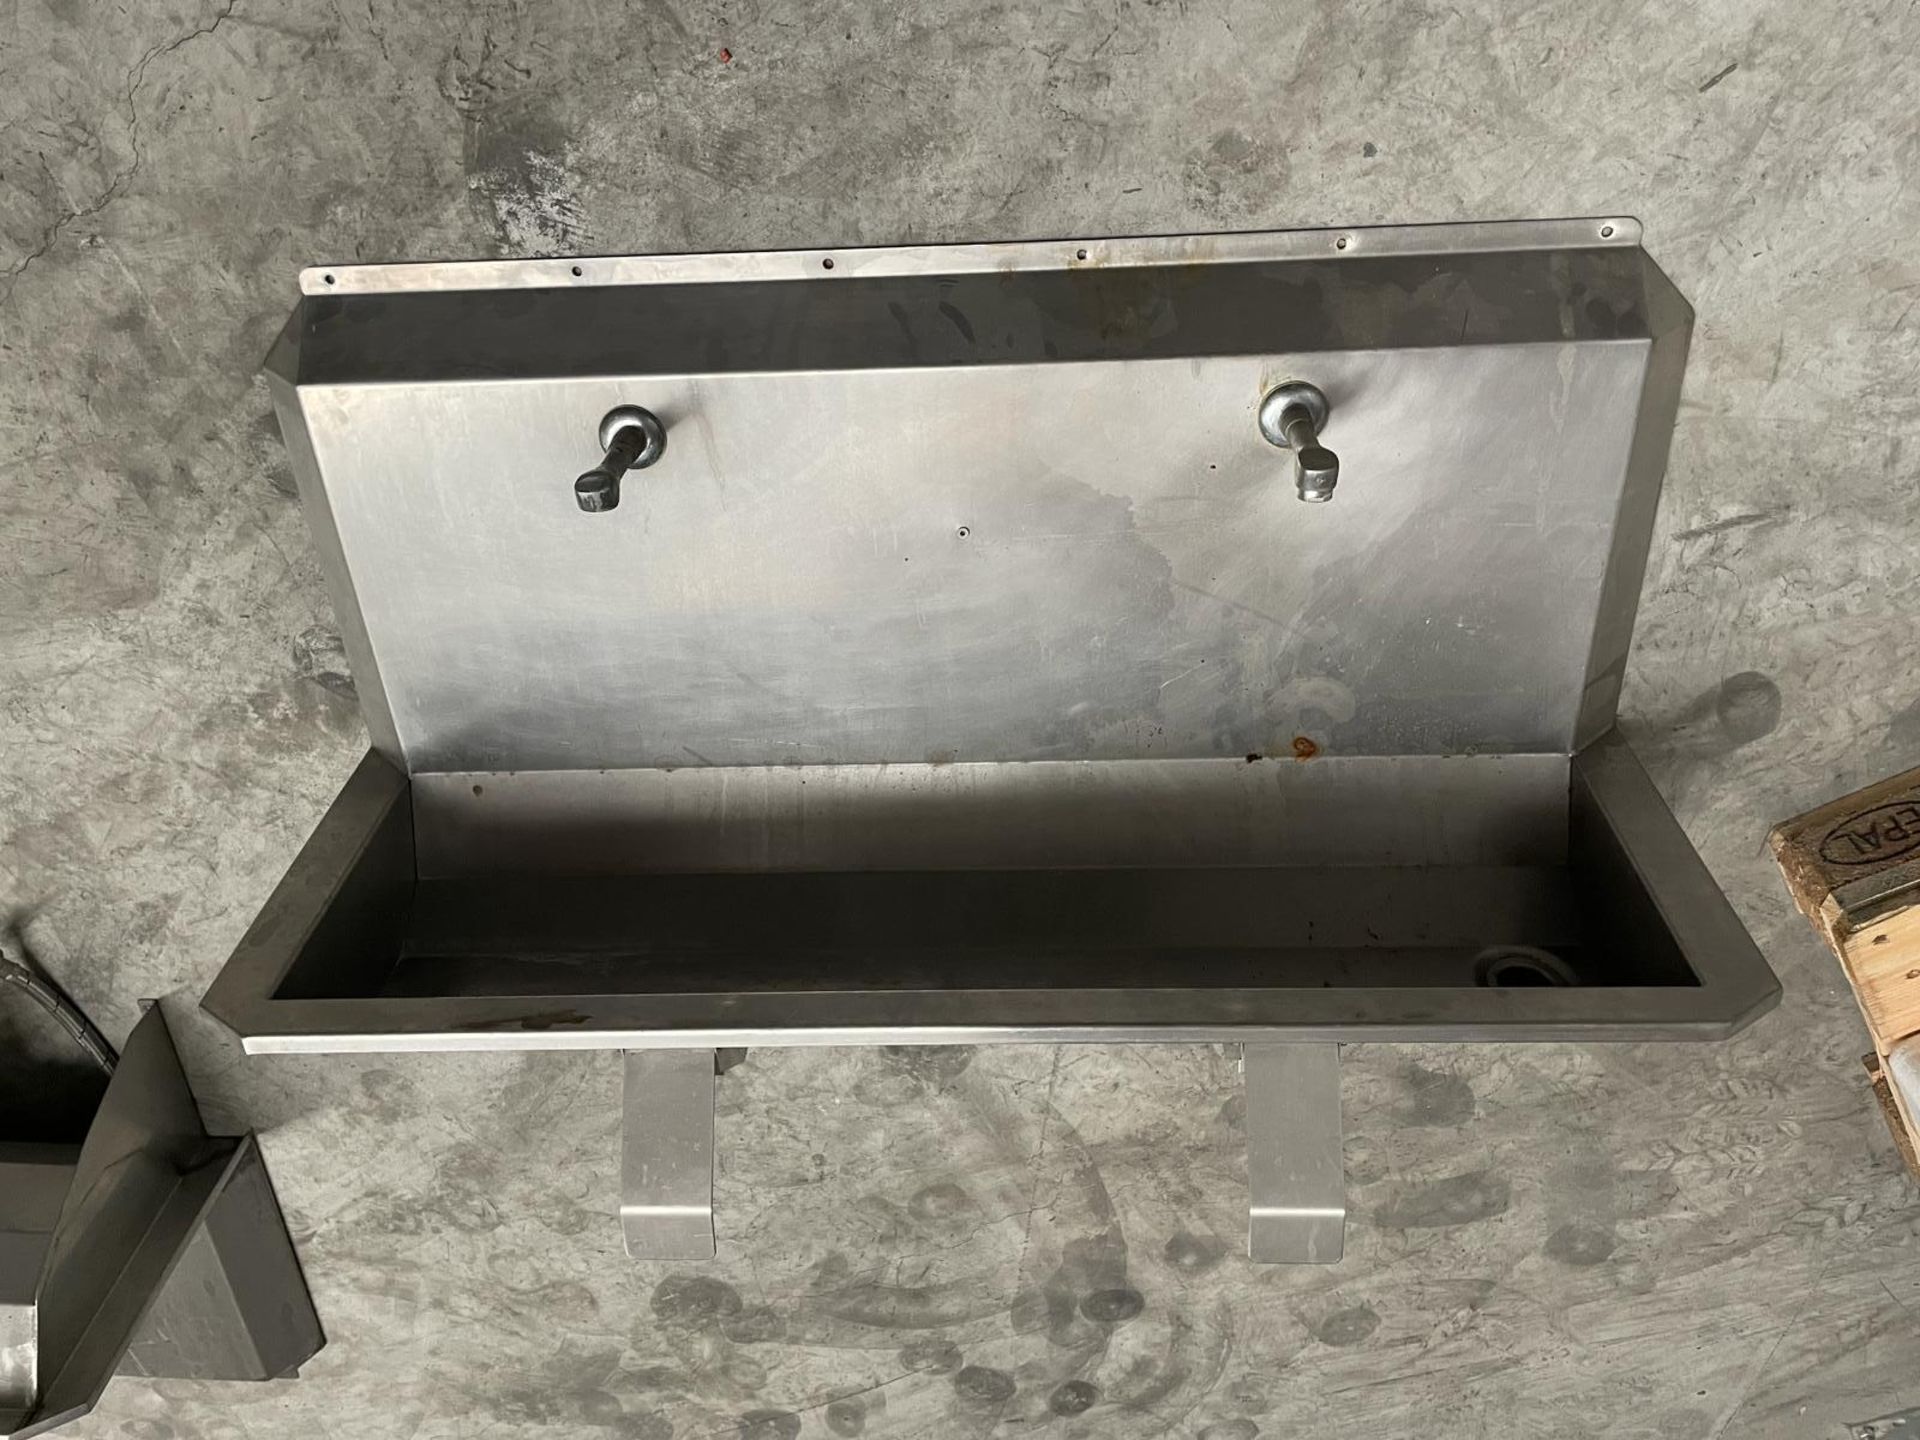 1 x Twin tap knee operated sink 1100 x 400 x 650 mm, 2 x single tap knee operated sinks (1 missing